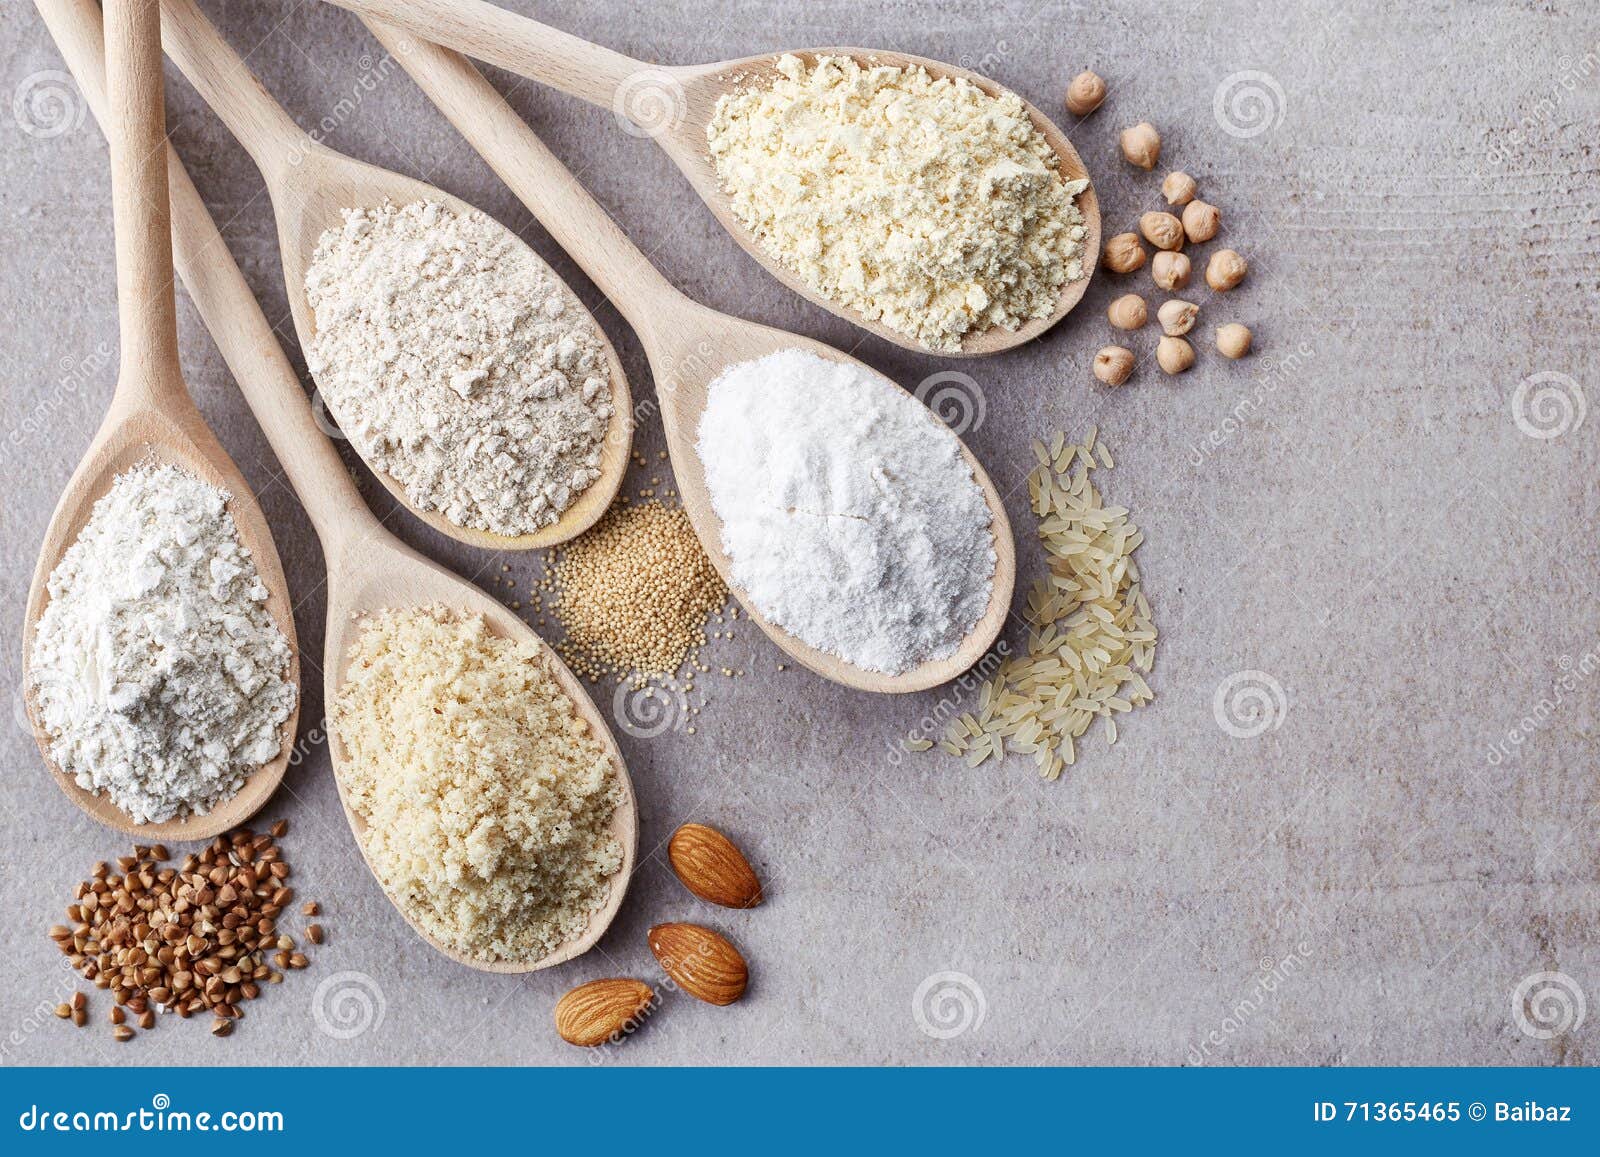 various gluten free flour